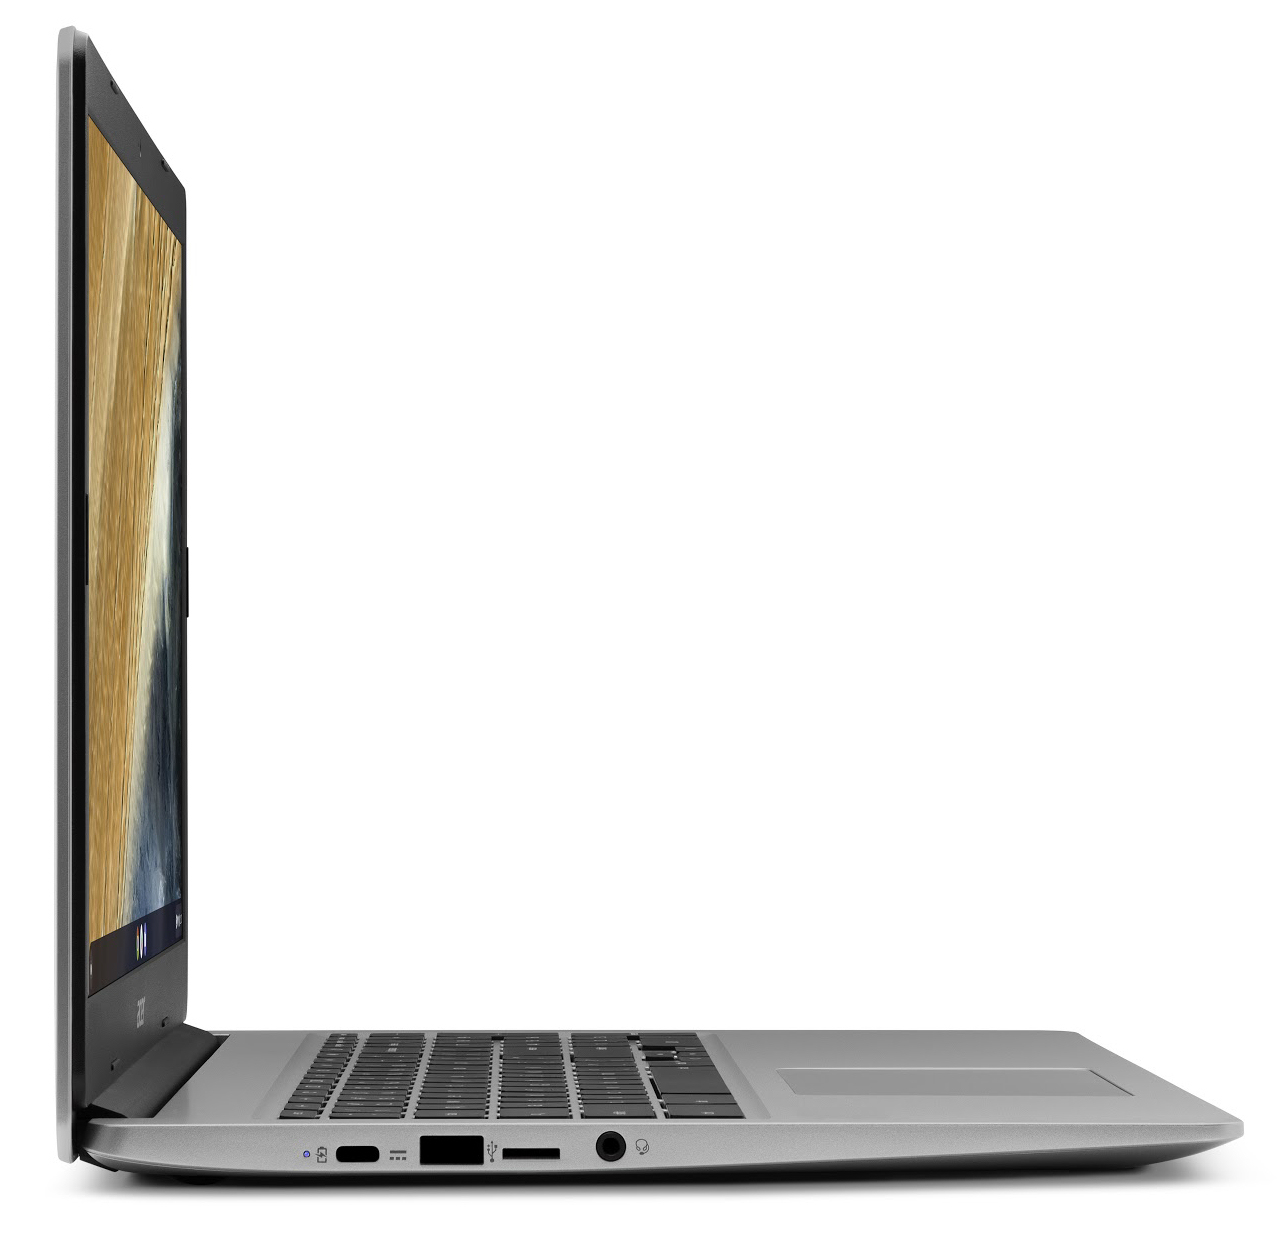 Lautloses, Notebookcheck.com 315 - bietet Chromebook im Test: Tests Acer CB315-3HT gute Chromebook schickes Akkulaufzeiten